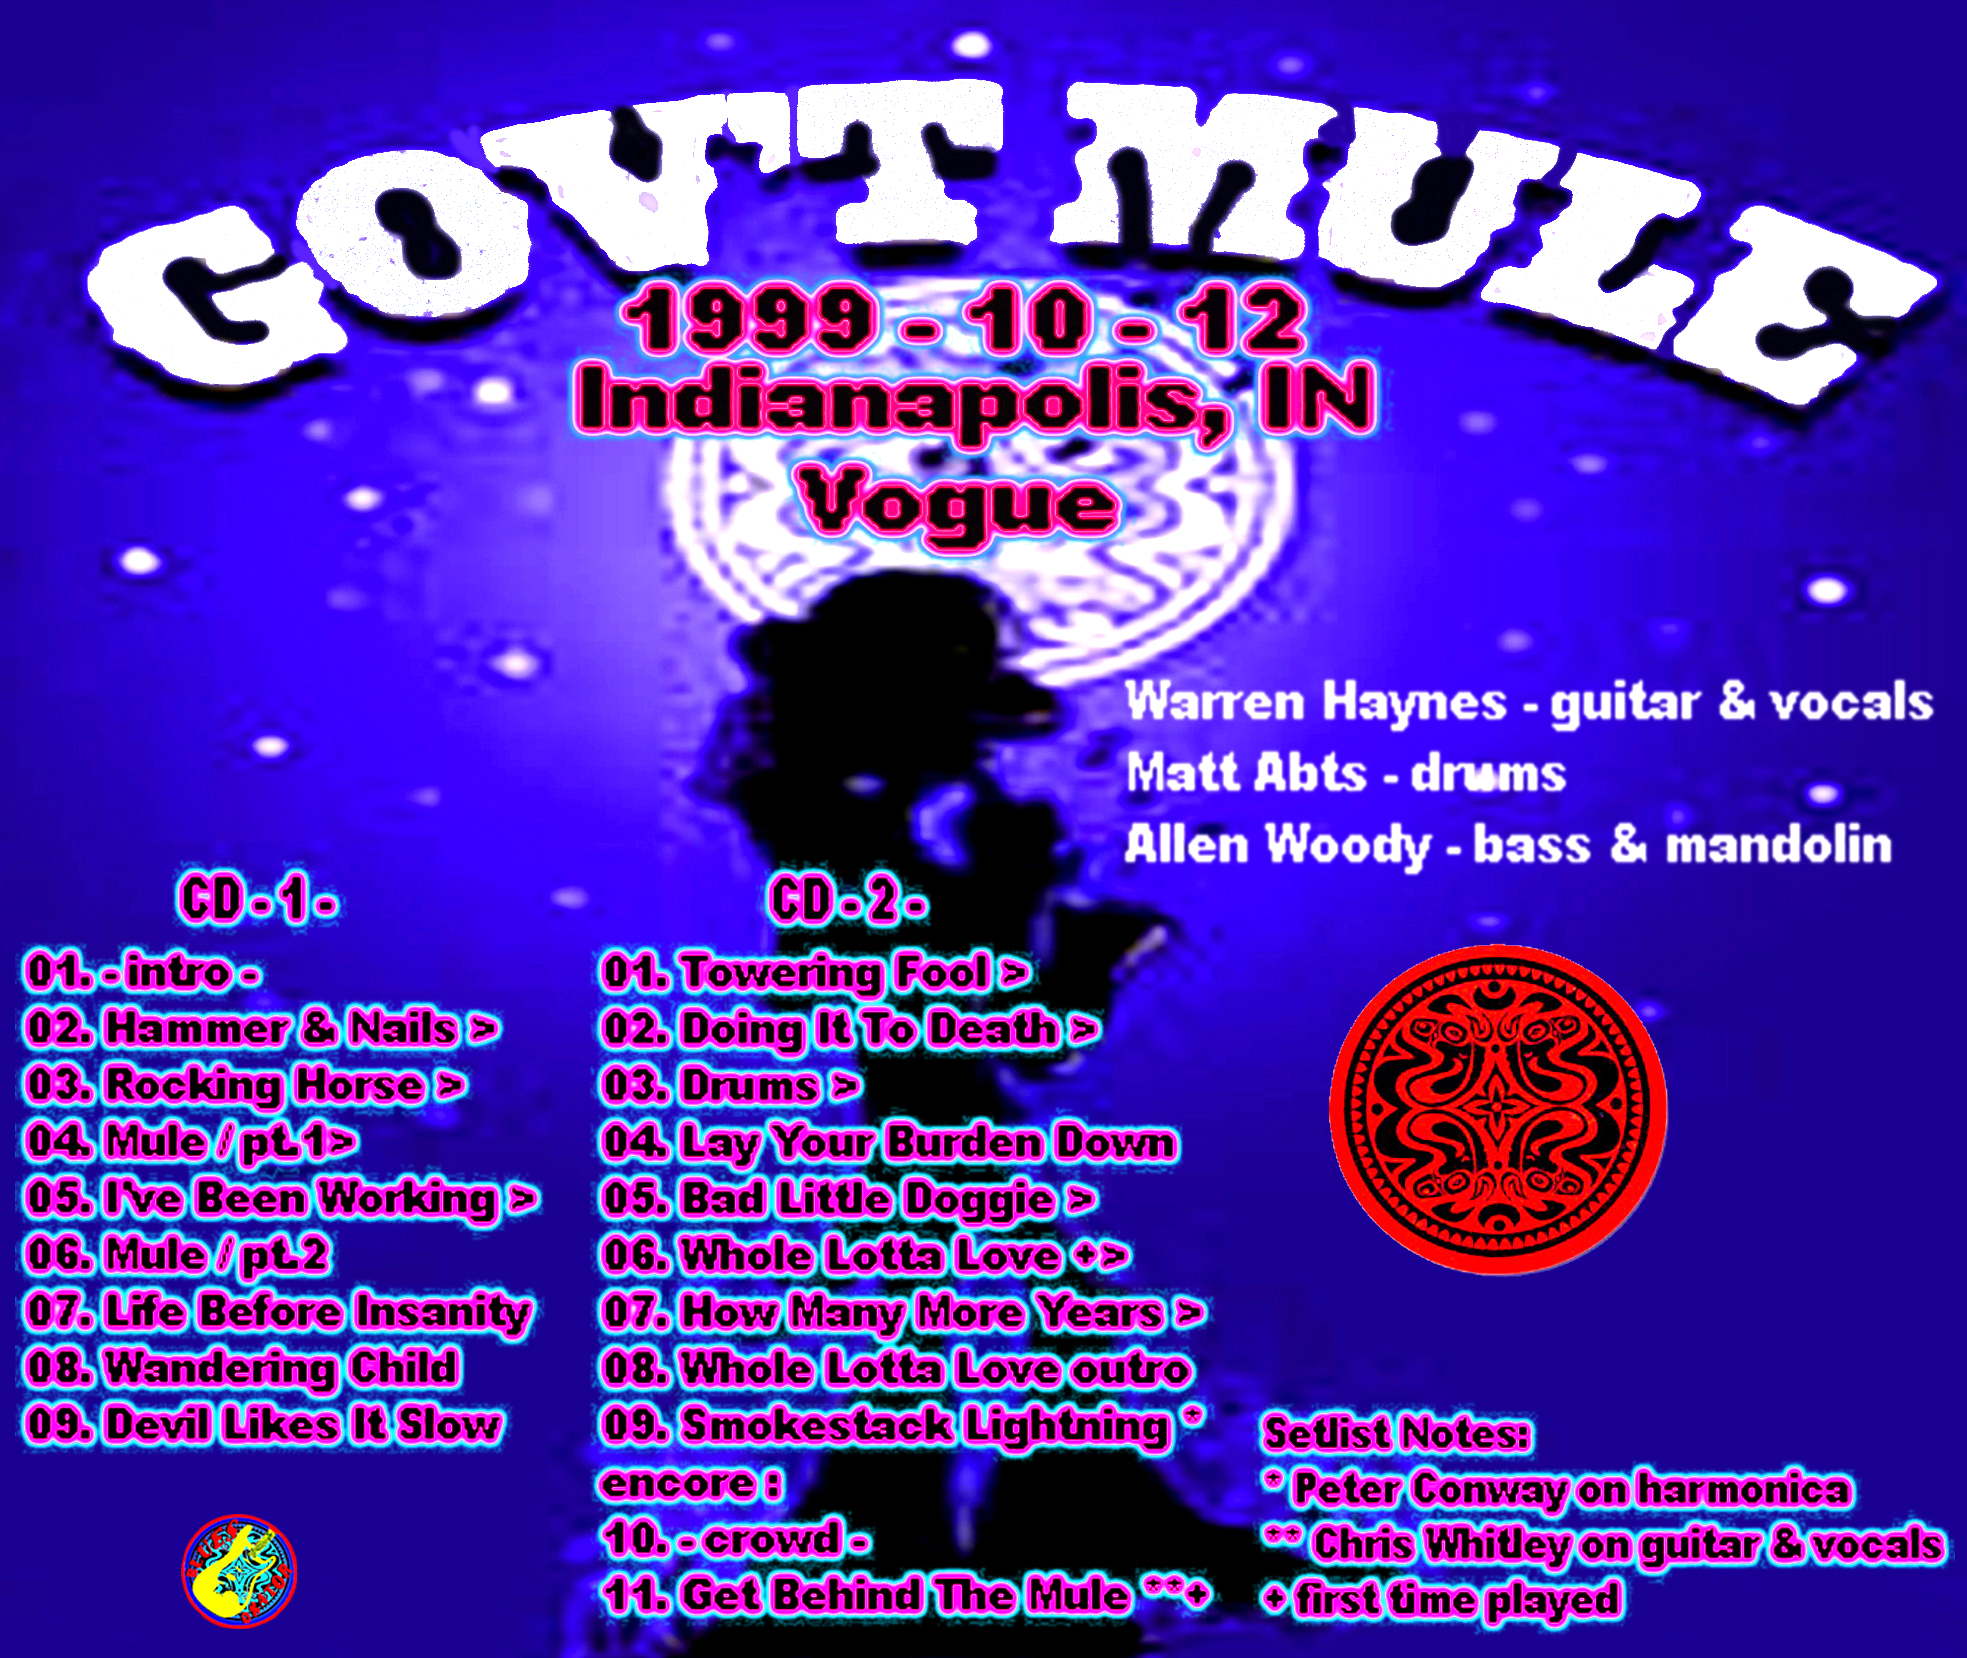 GovernmentMule1999-10-12VogueIndianapolisIN (3).jpg